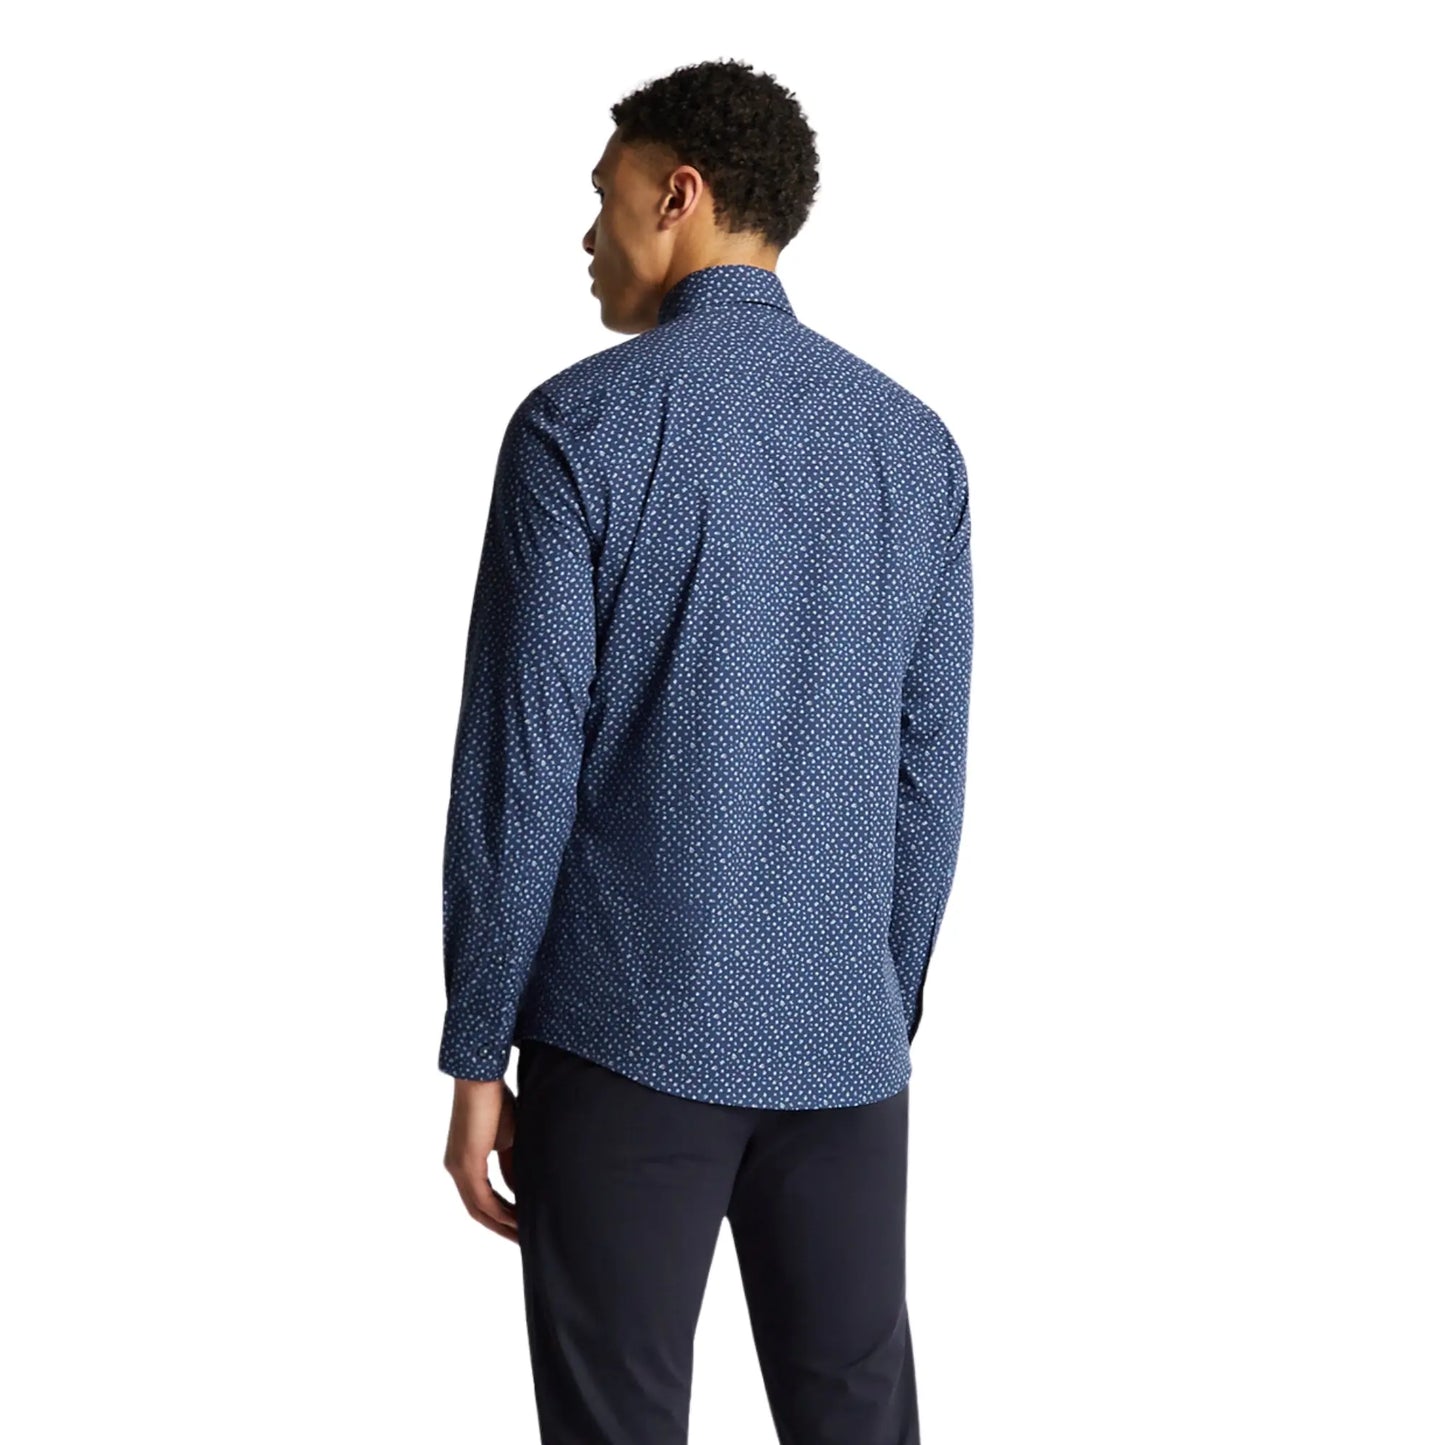 Buy Remus Uomo Frank Leaf Print Long Sleeve Shirt - Navy | Long-Sleeved Shirtss at Woven Durham